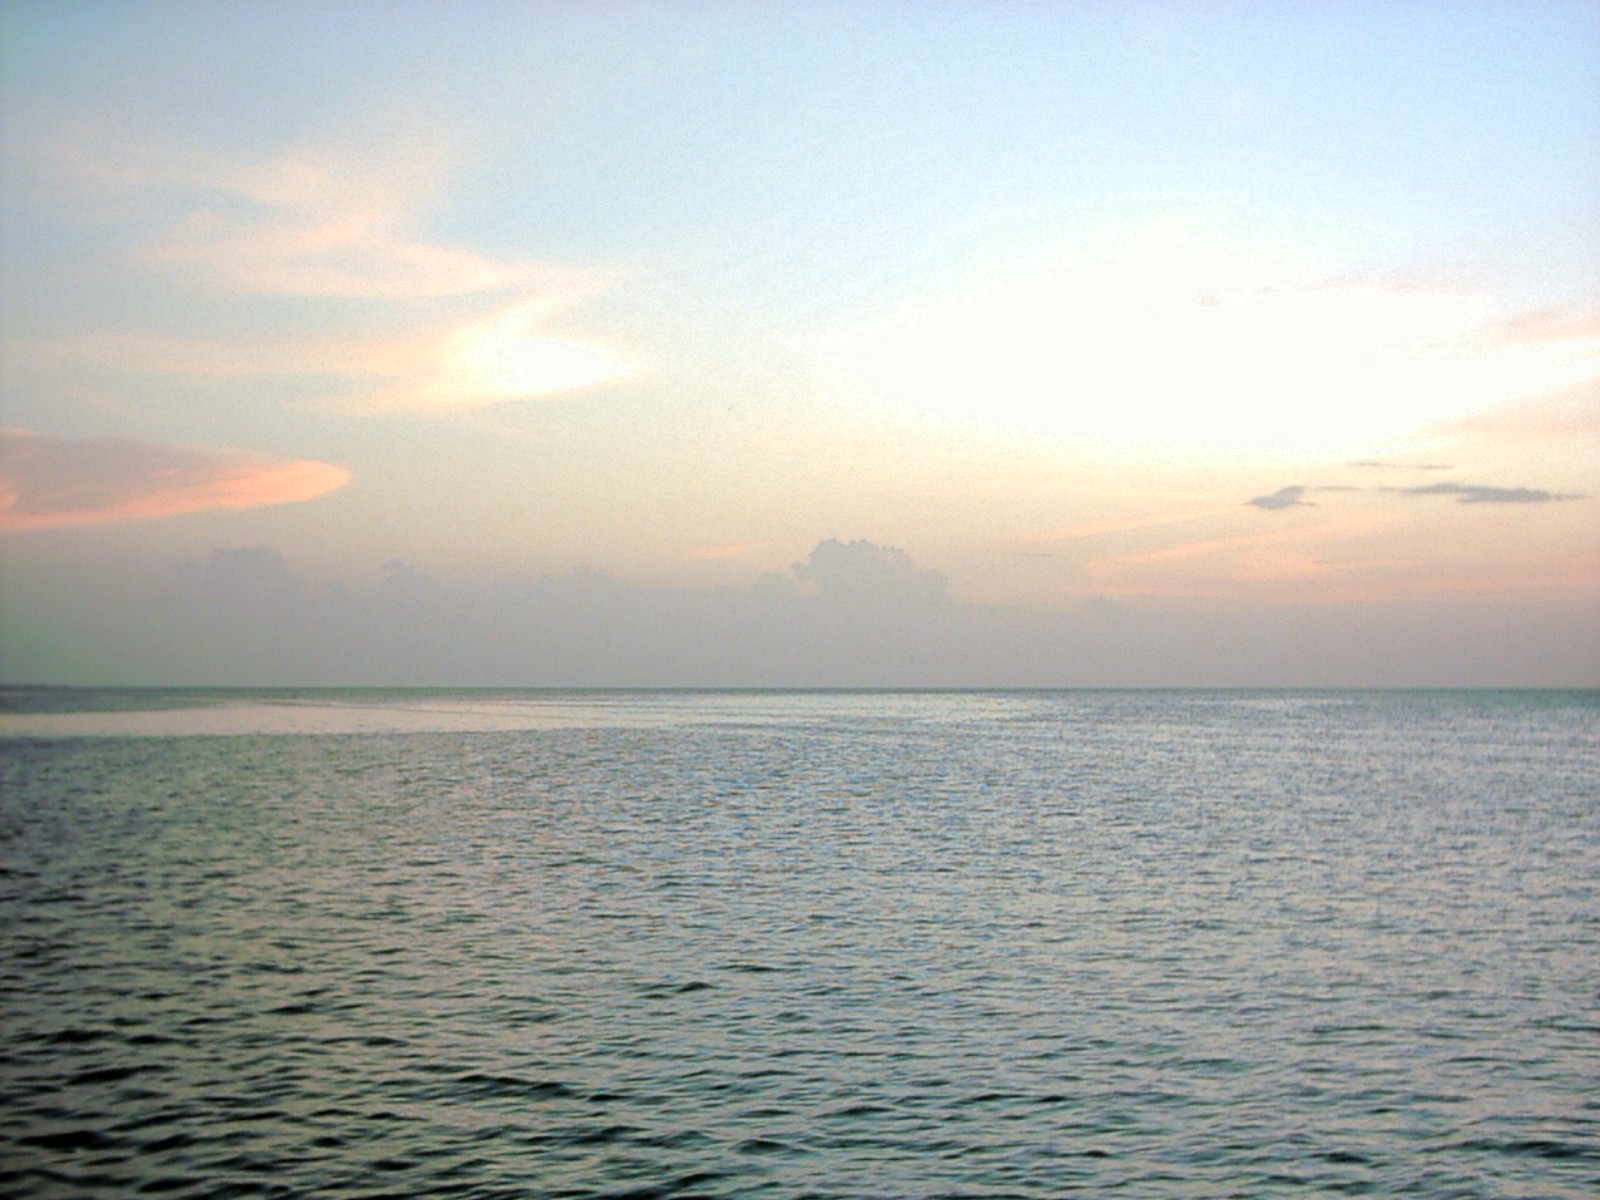 File:Sun and sea.JPG - Wikimedia Commons